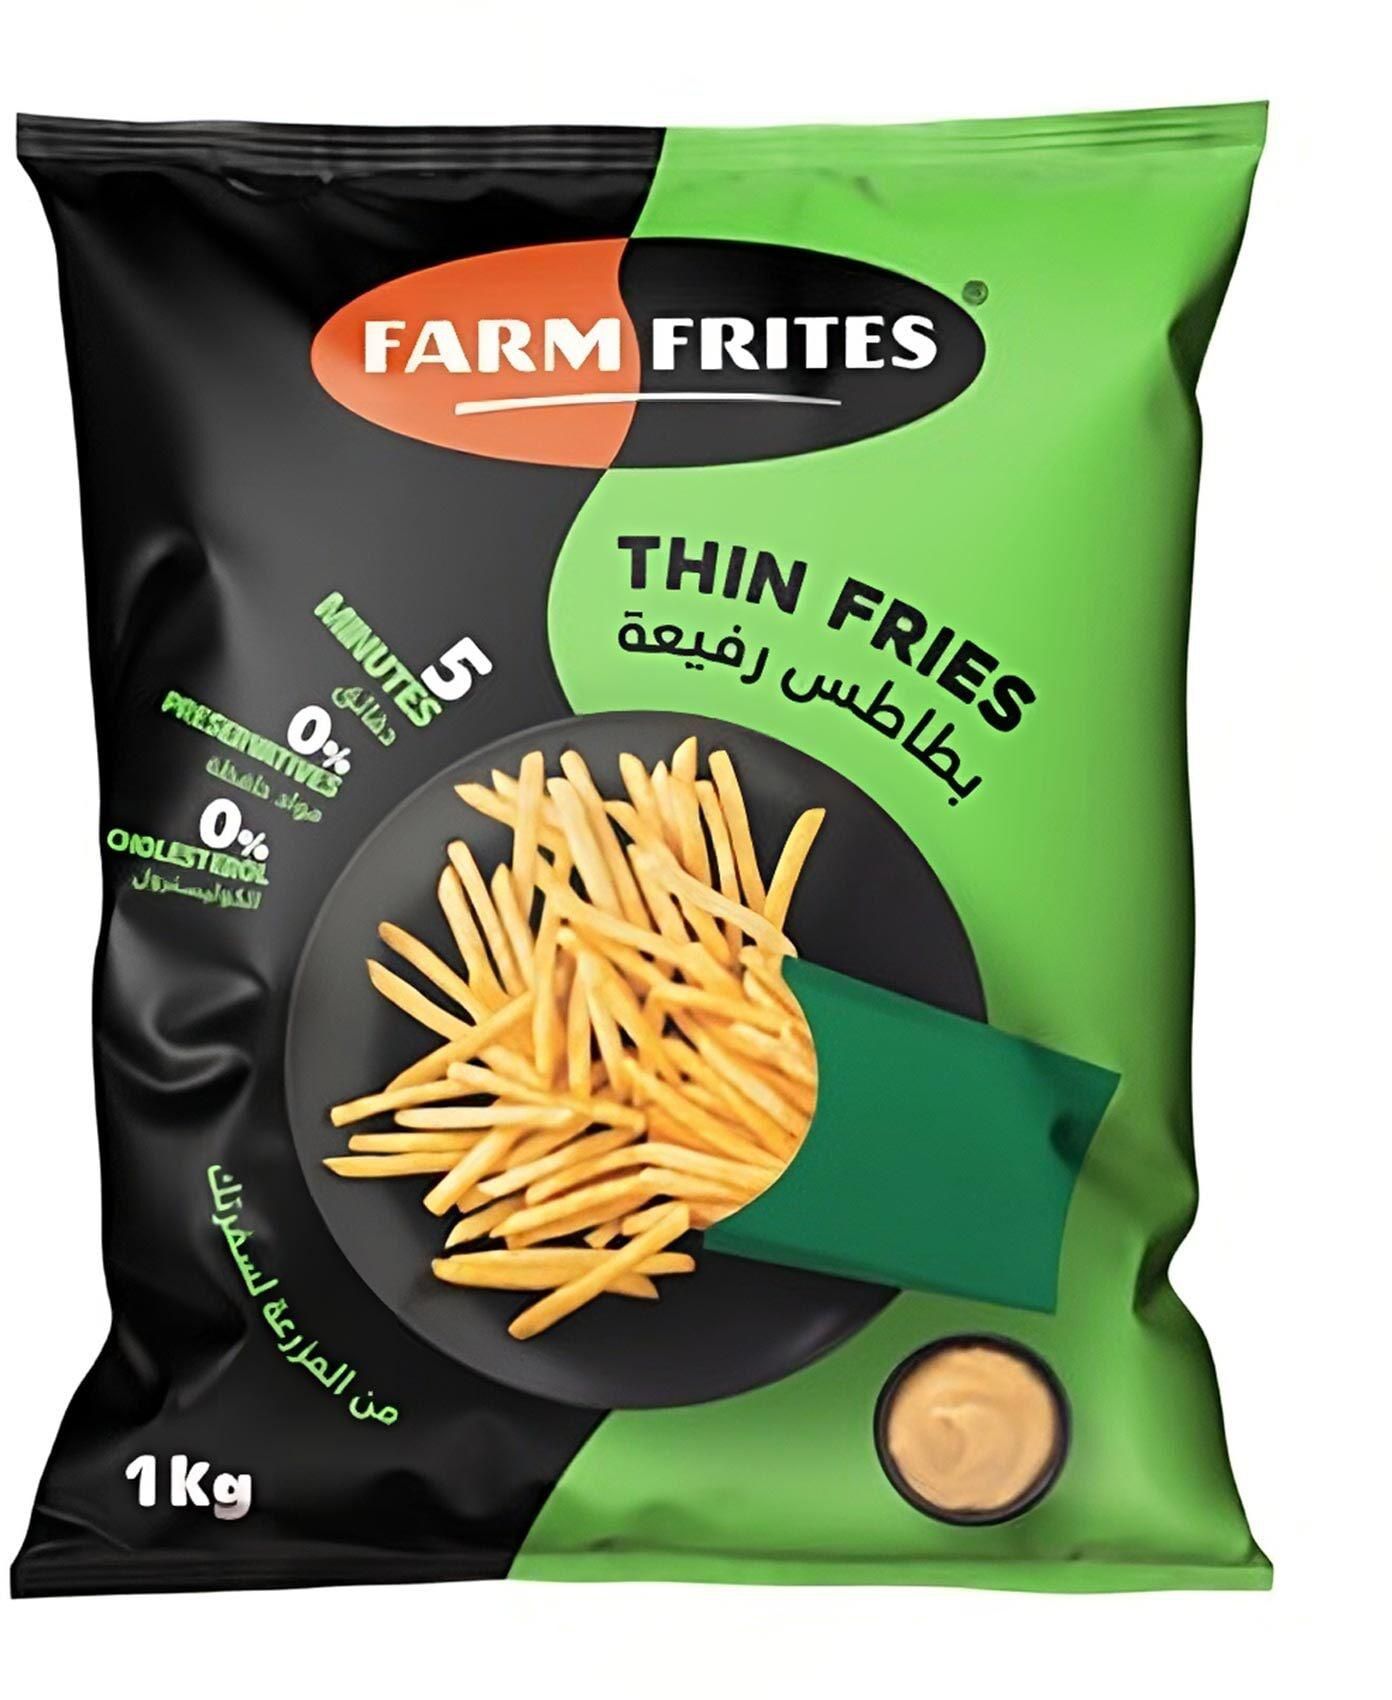 Farm Frites Allumettes Thin Cut Fries - 1 kg